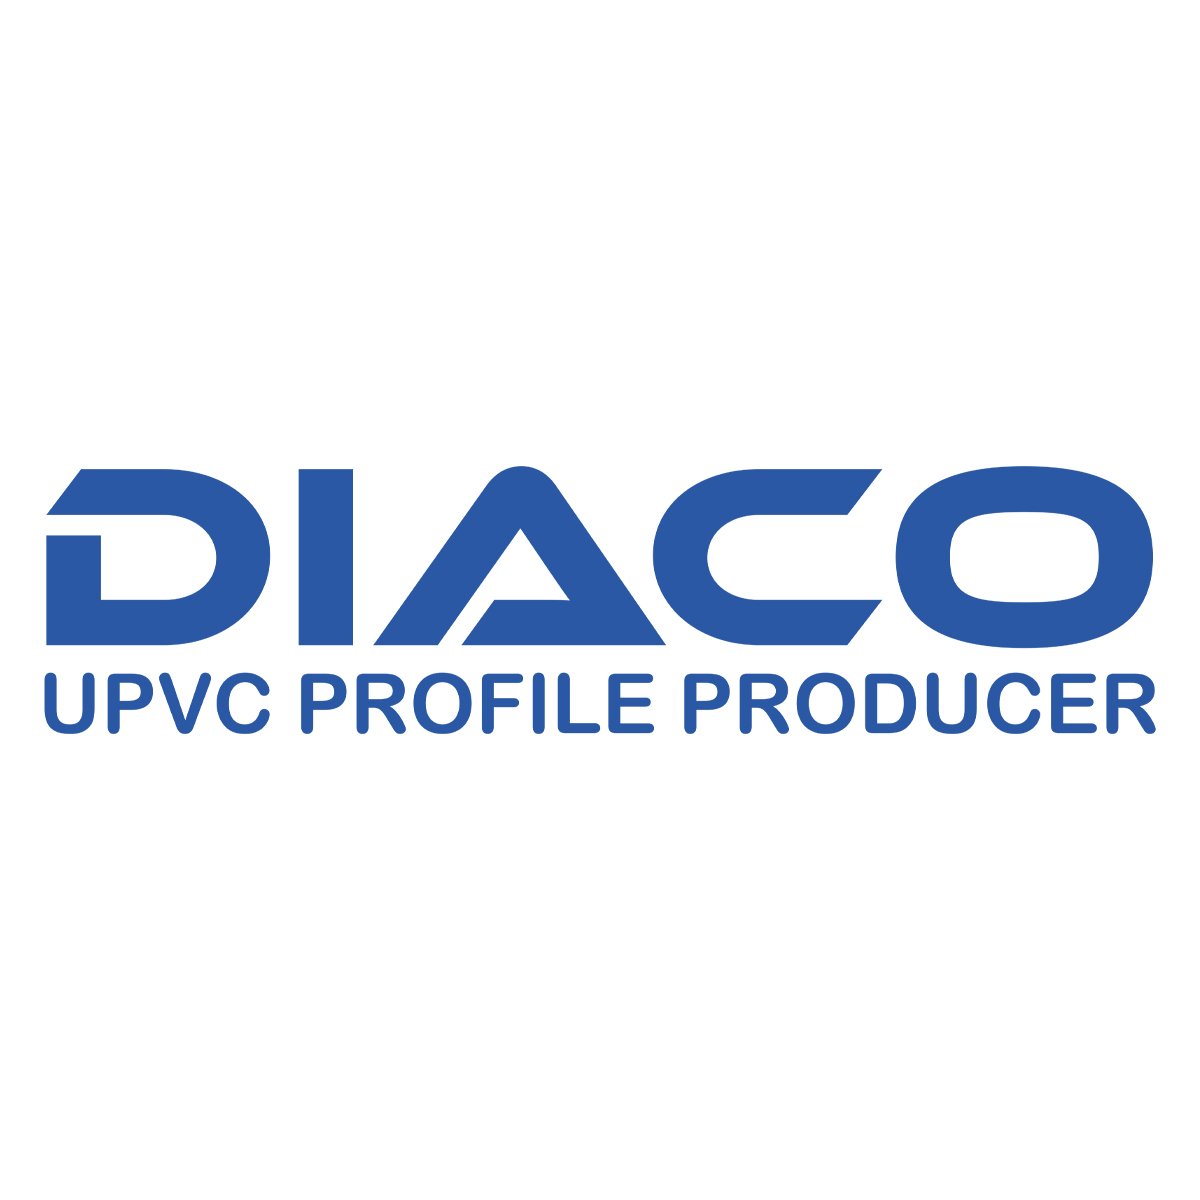 سرپرست انبار | Warehouse Supervisor - دیاکو پروفیل | Diaco Profile